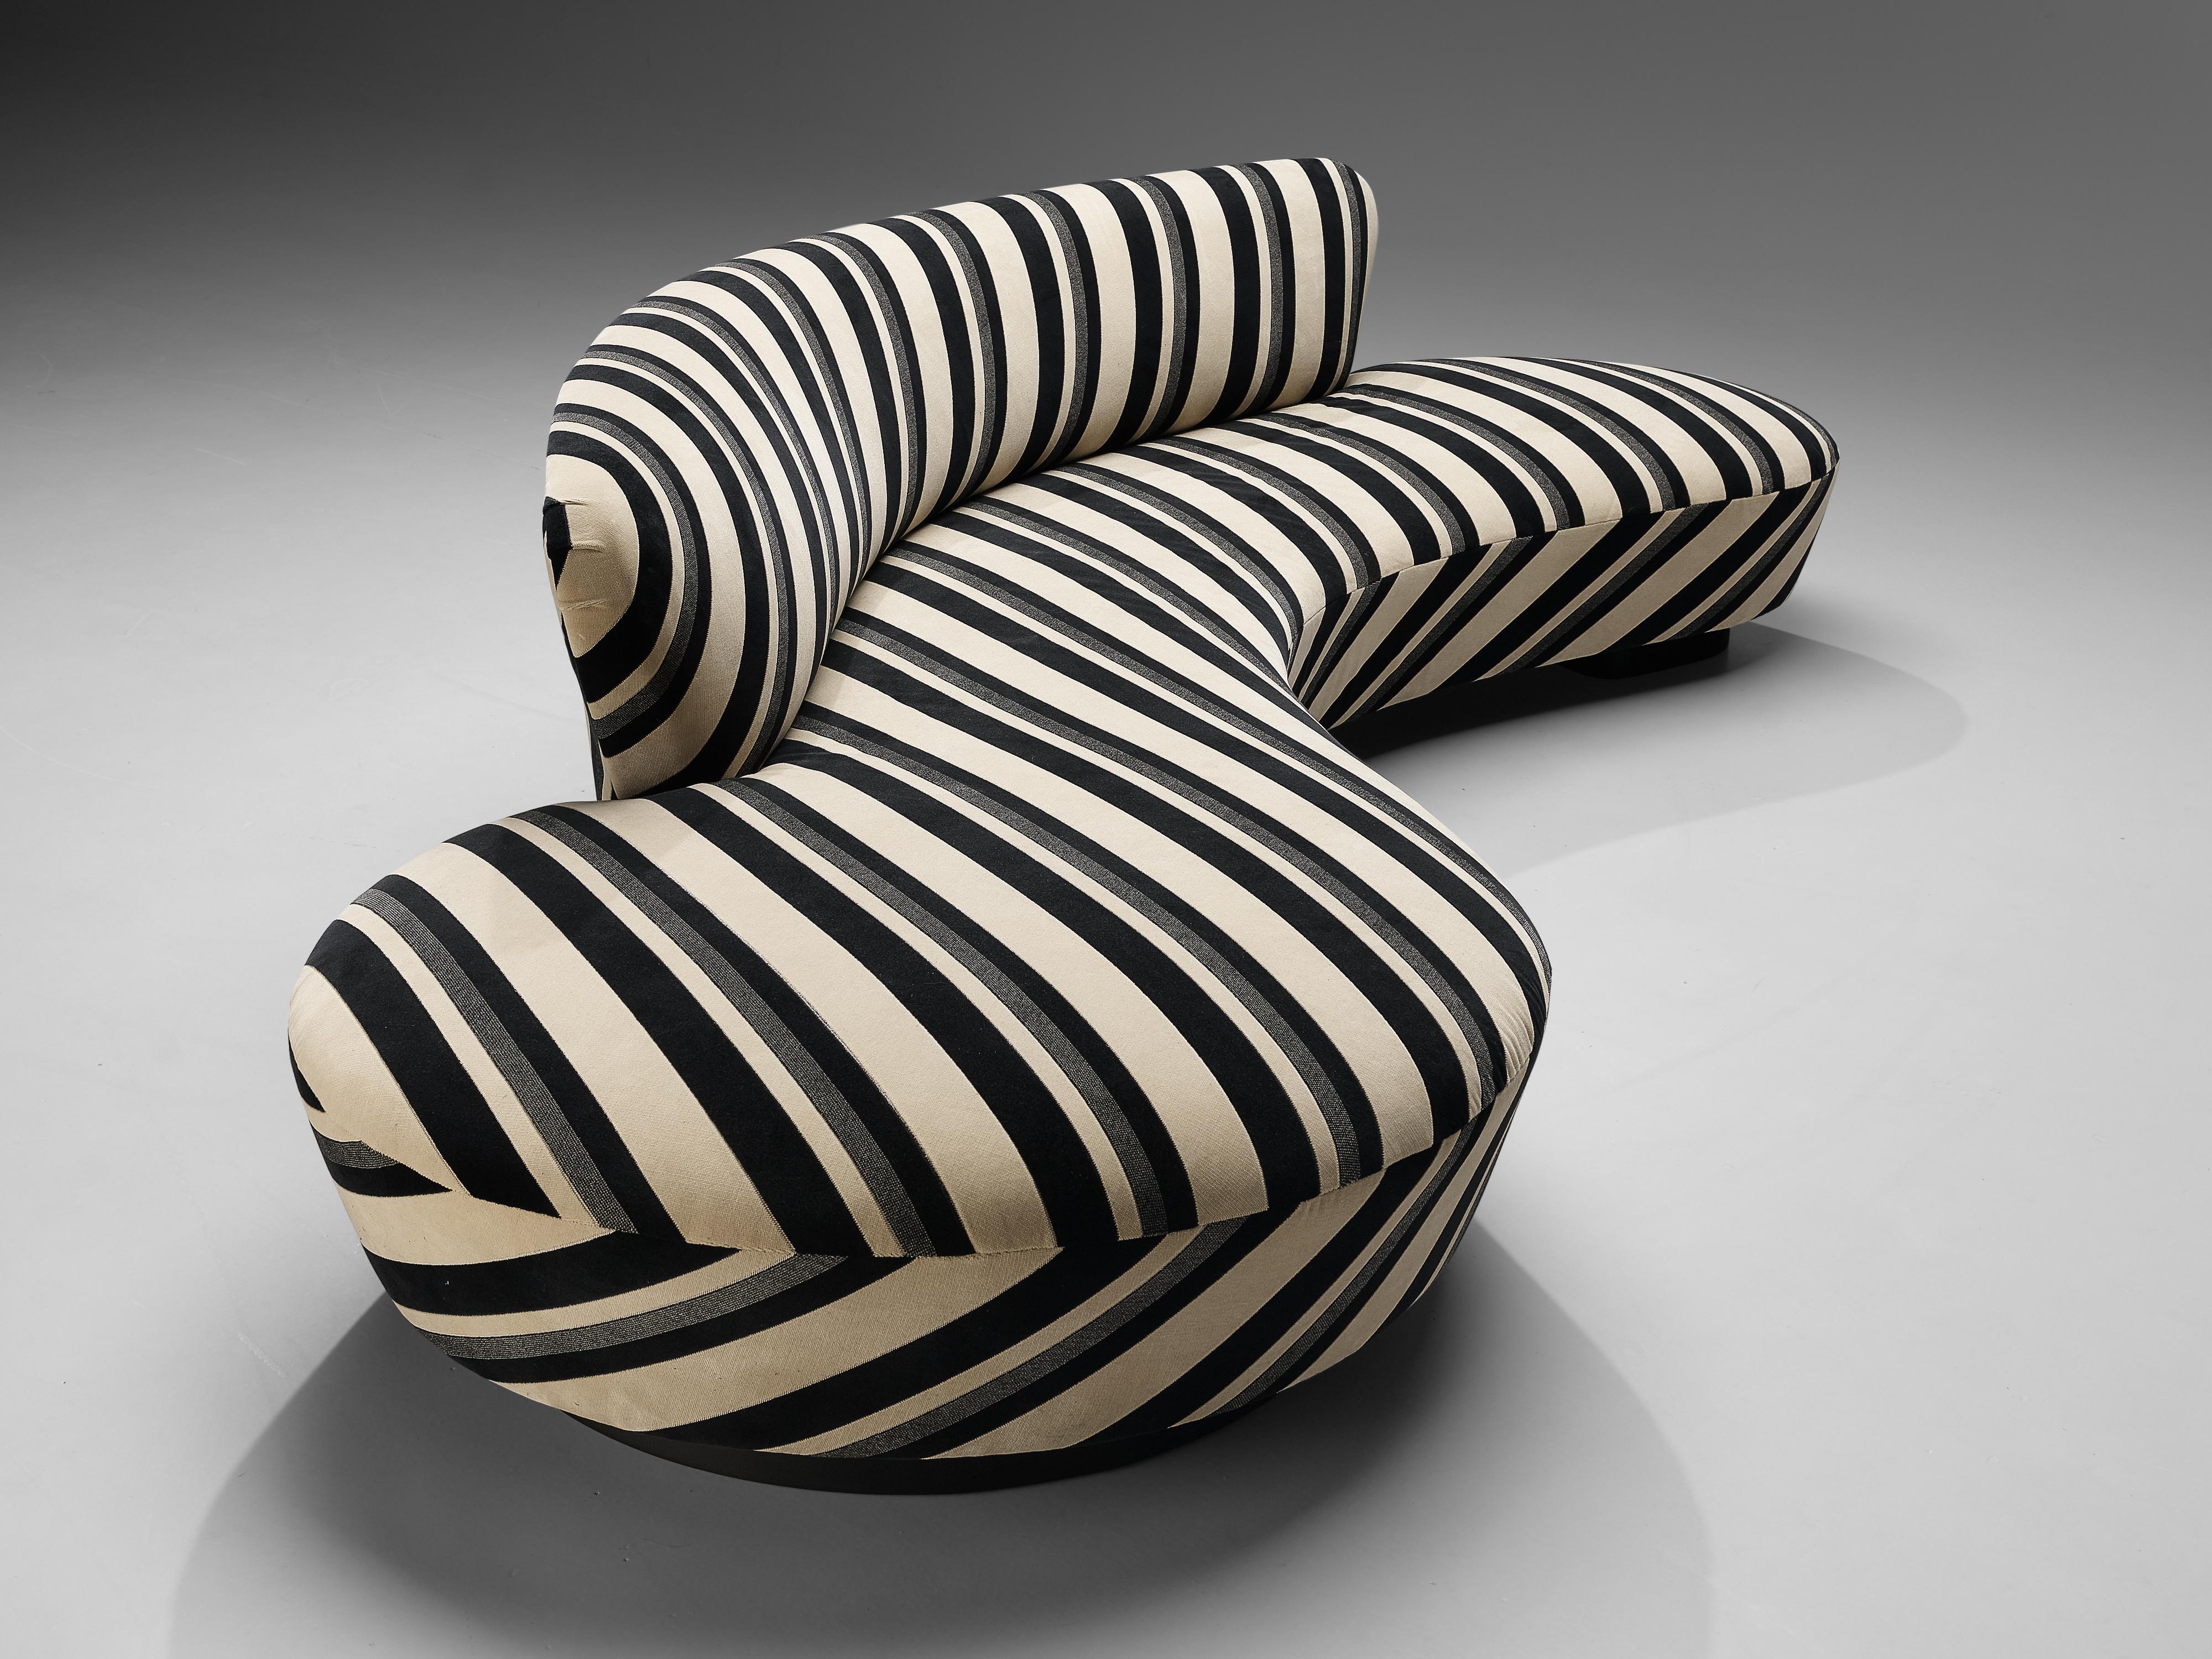 Iconic Vladimir Kagan 'Serpentine' Sofa in Striped Upholstery 1